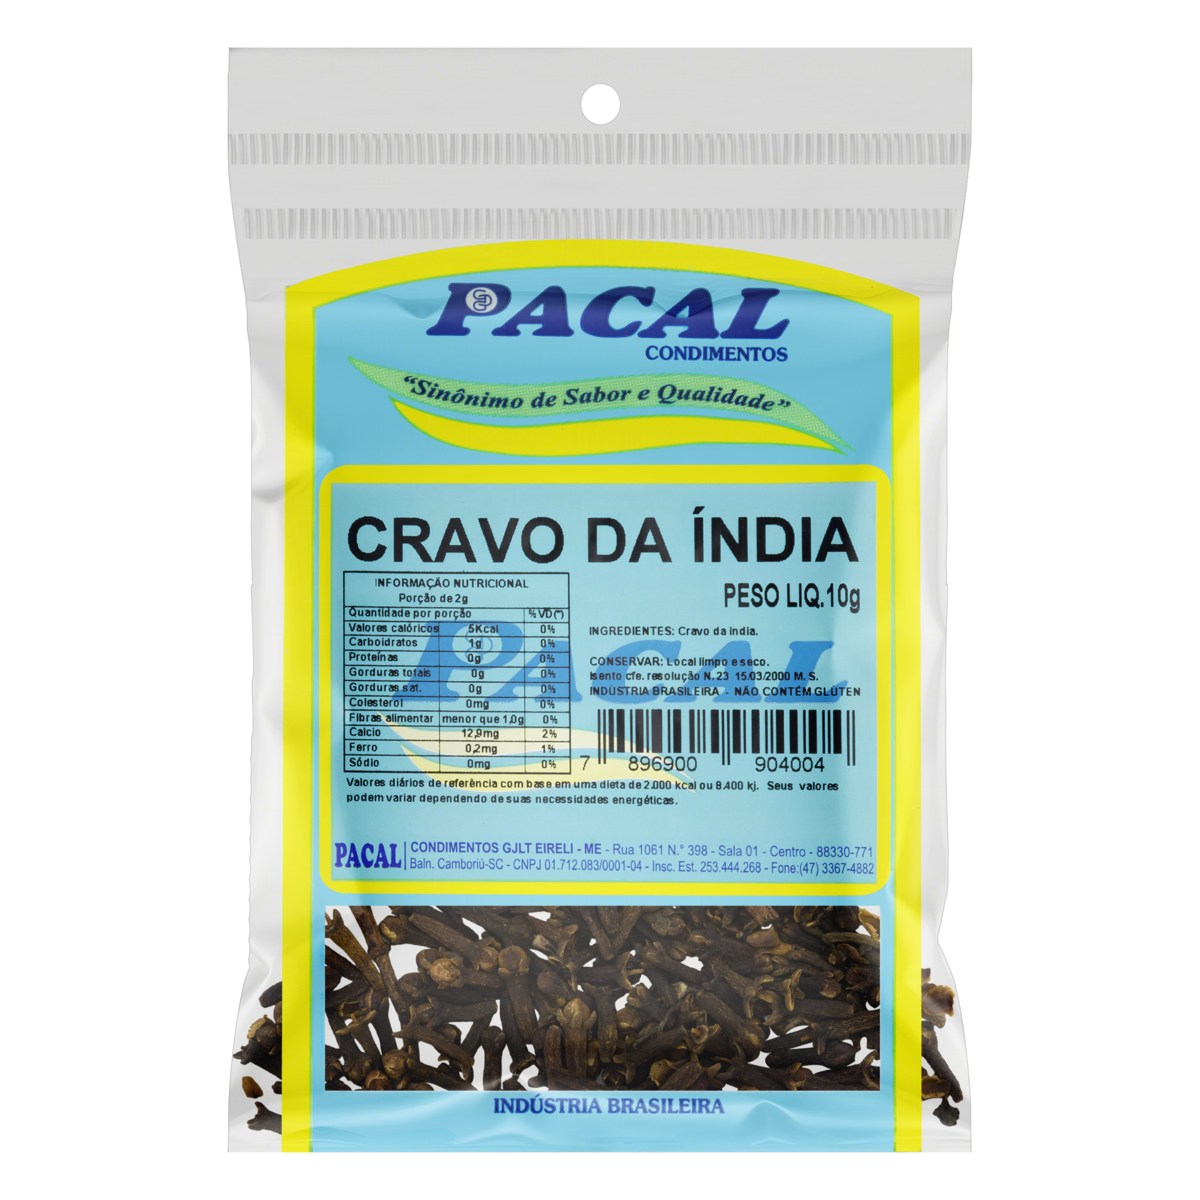 7896900904004 - CRAVO-DA-ÍNDIA PACAL PACOTE 10G